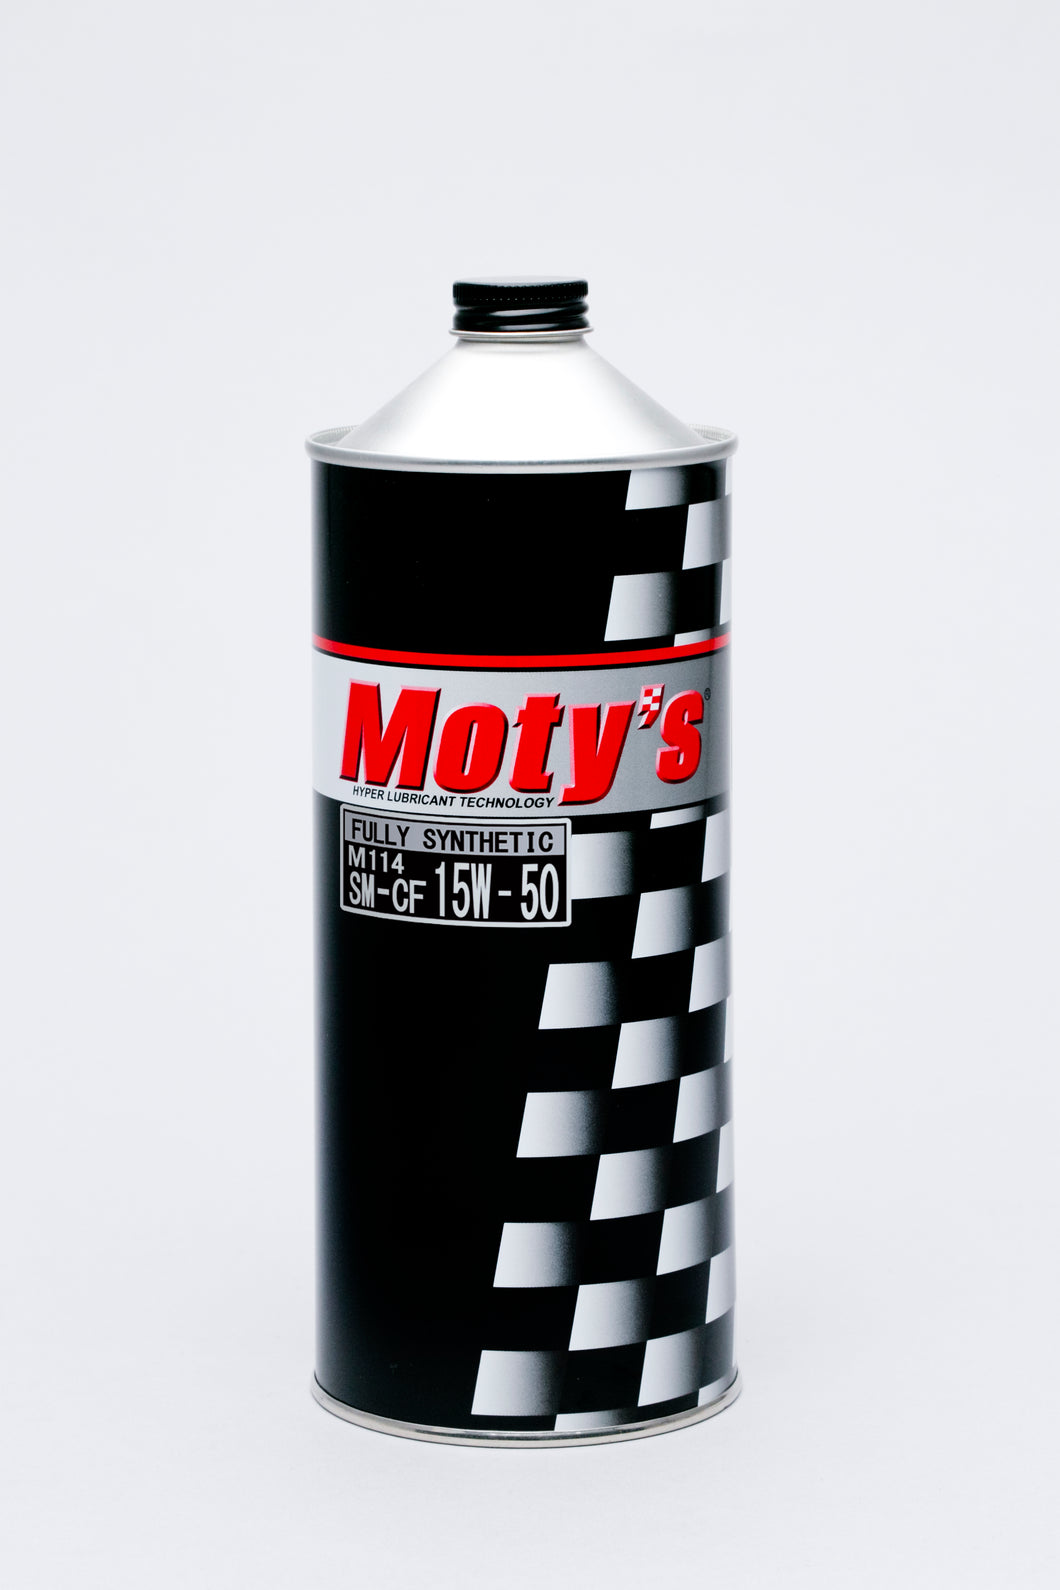 MOTY'S ENGINE OIL M114 15W50